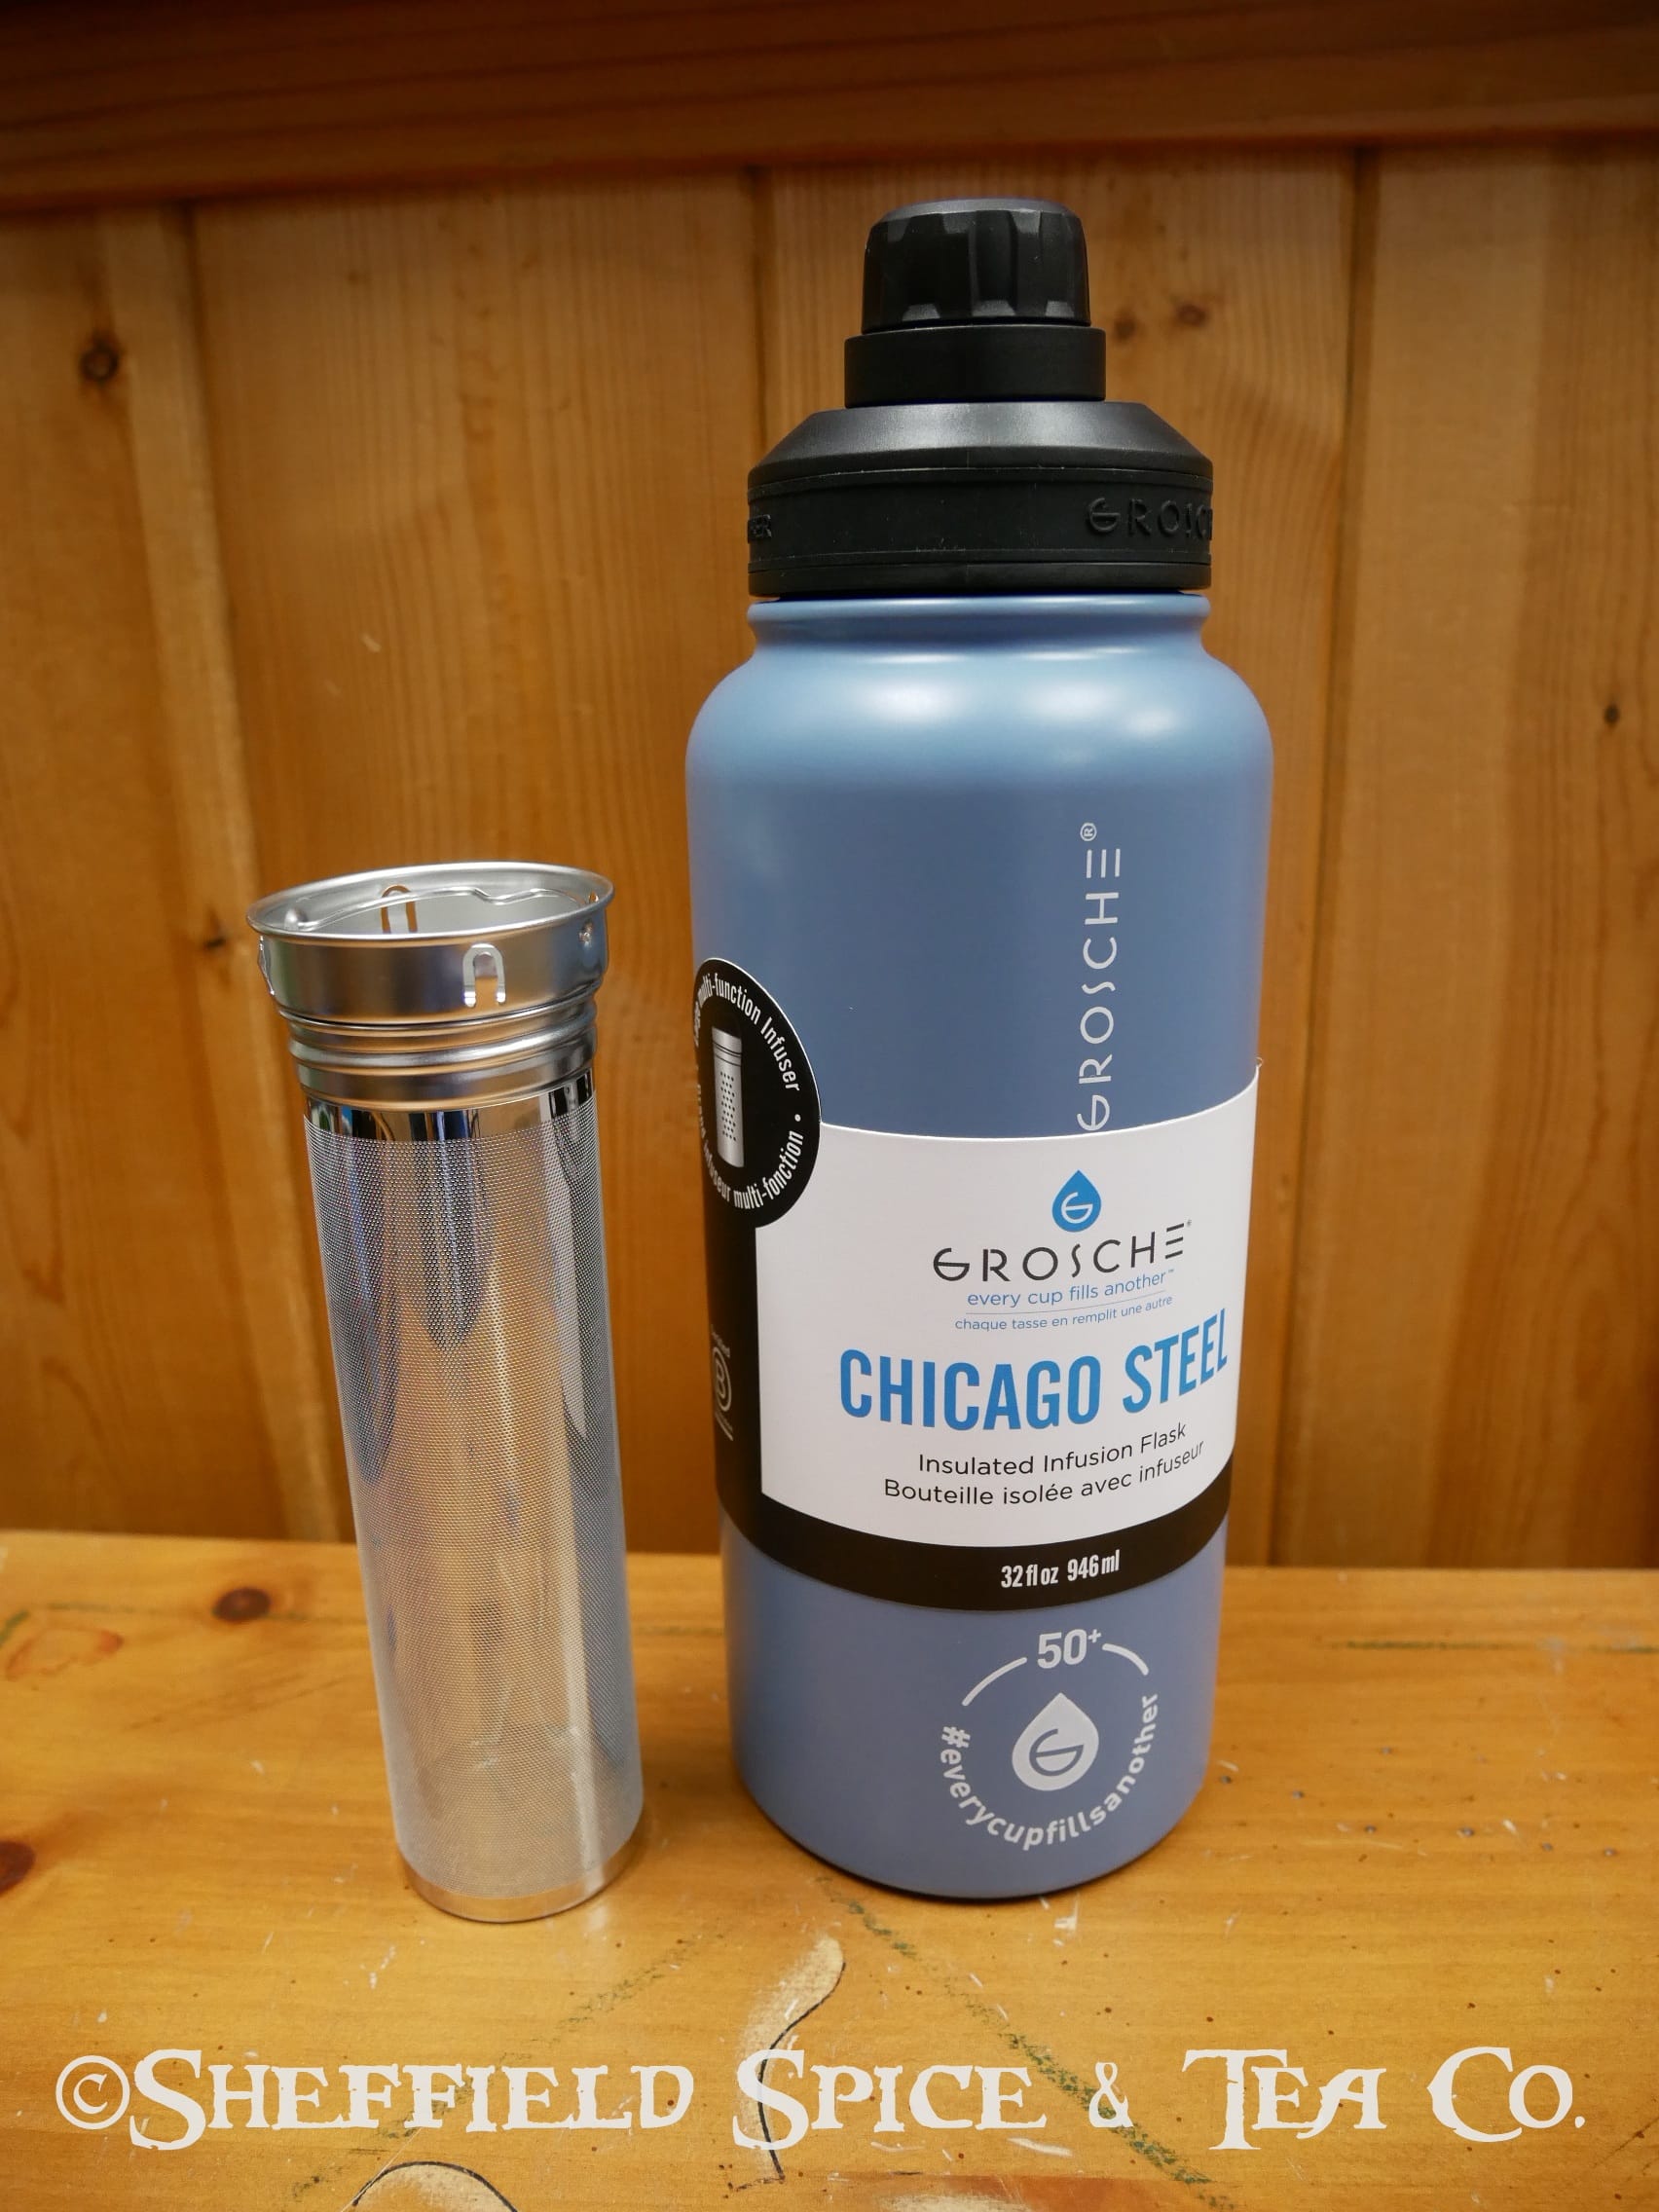 Grosche Chicago Steel Insulated Tea Infusion Flask, Tea and Coffee Tumbler, 32 Fluid oz - Fuchsia Pink